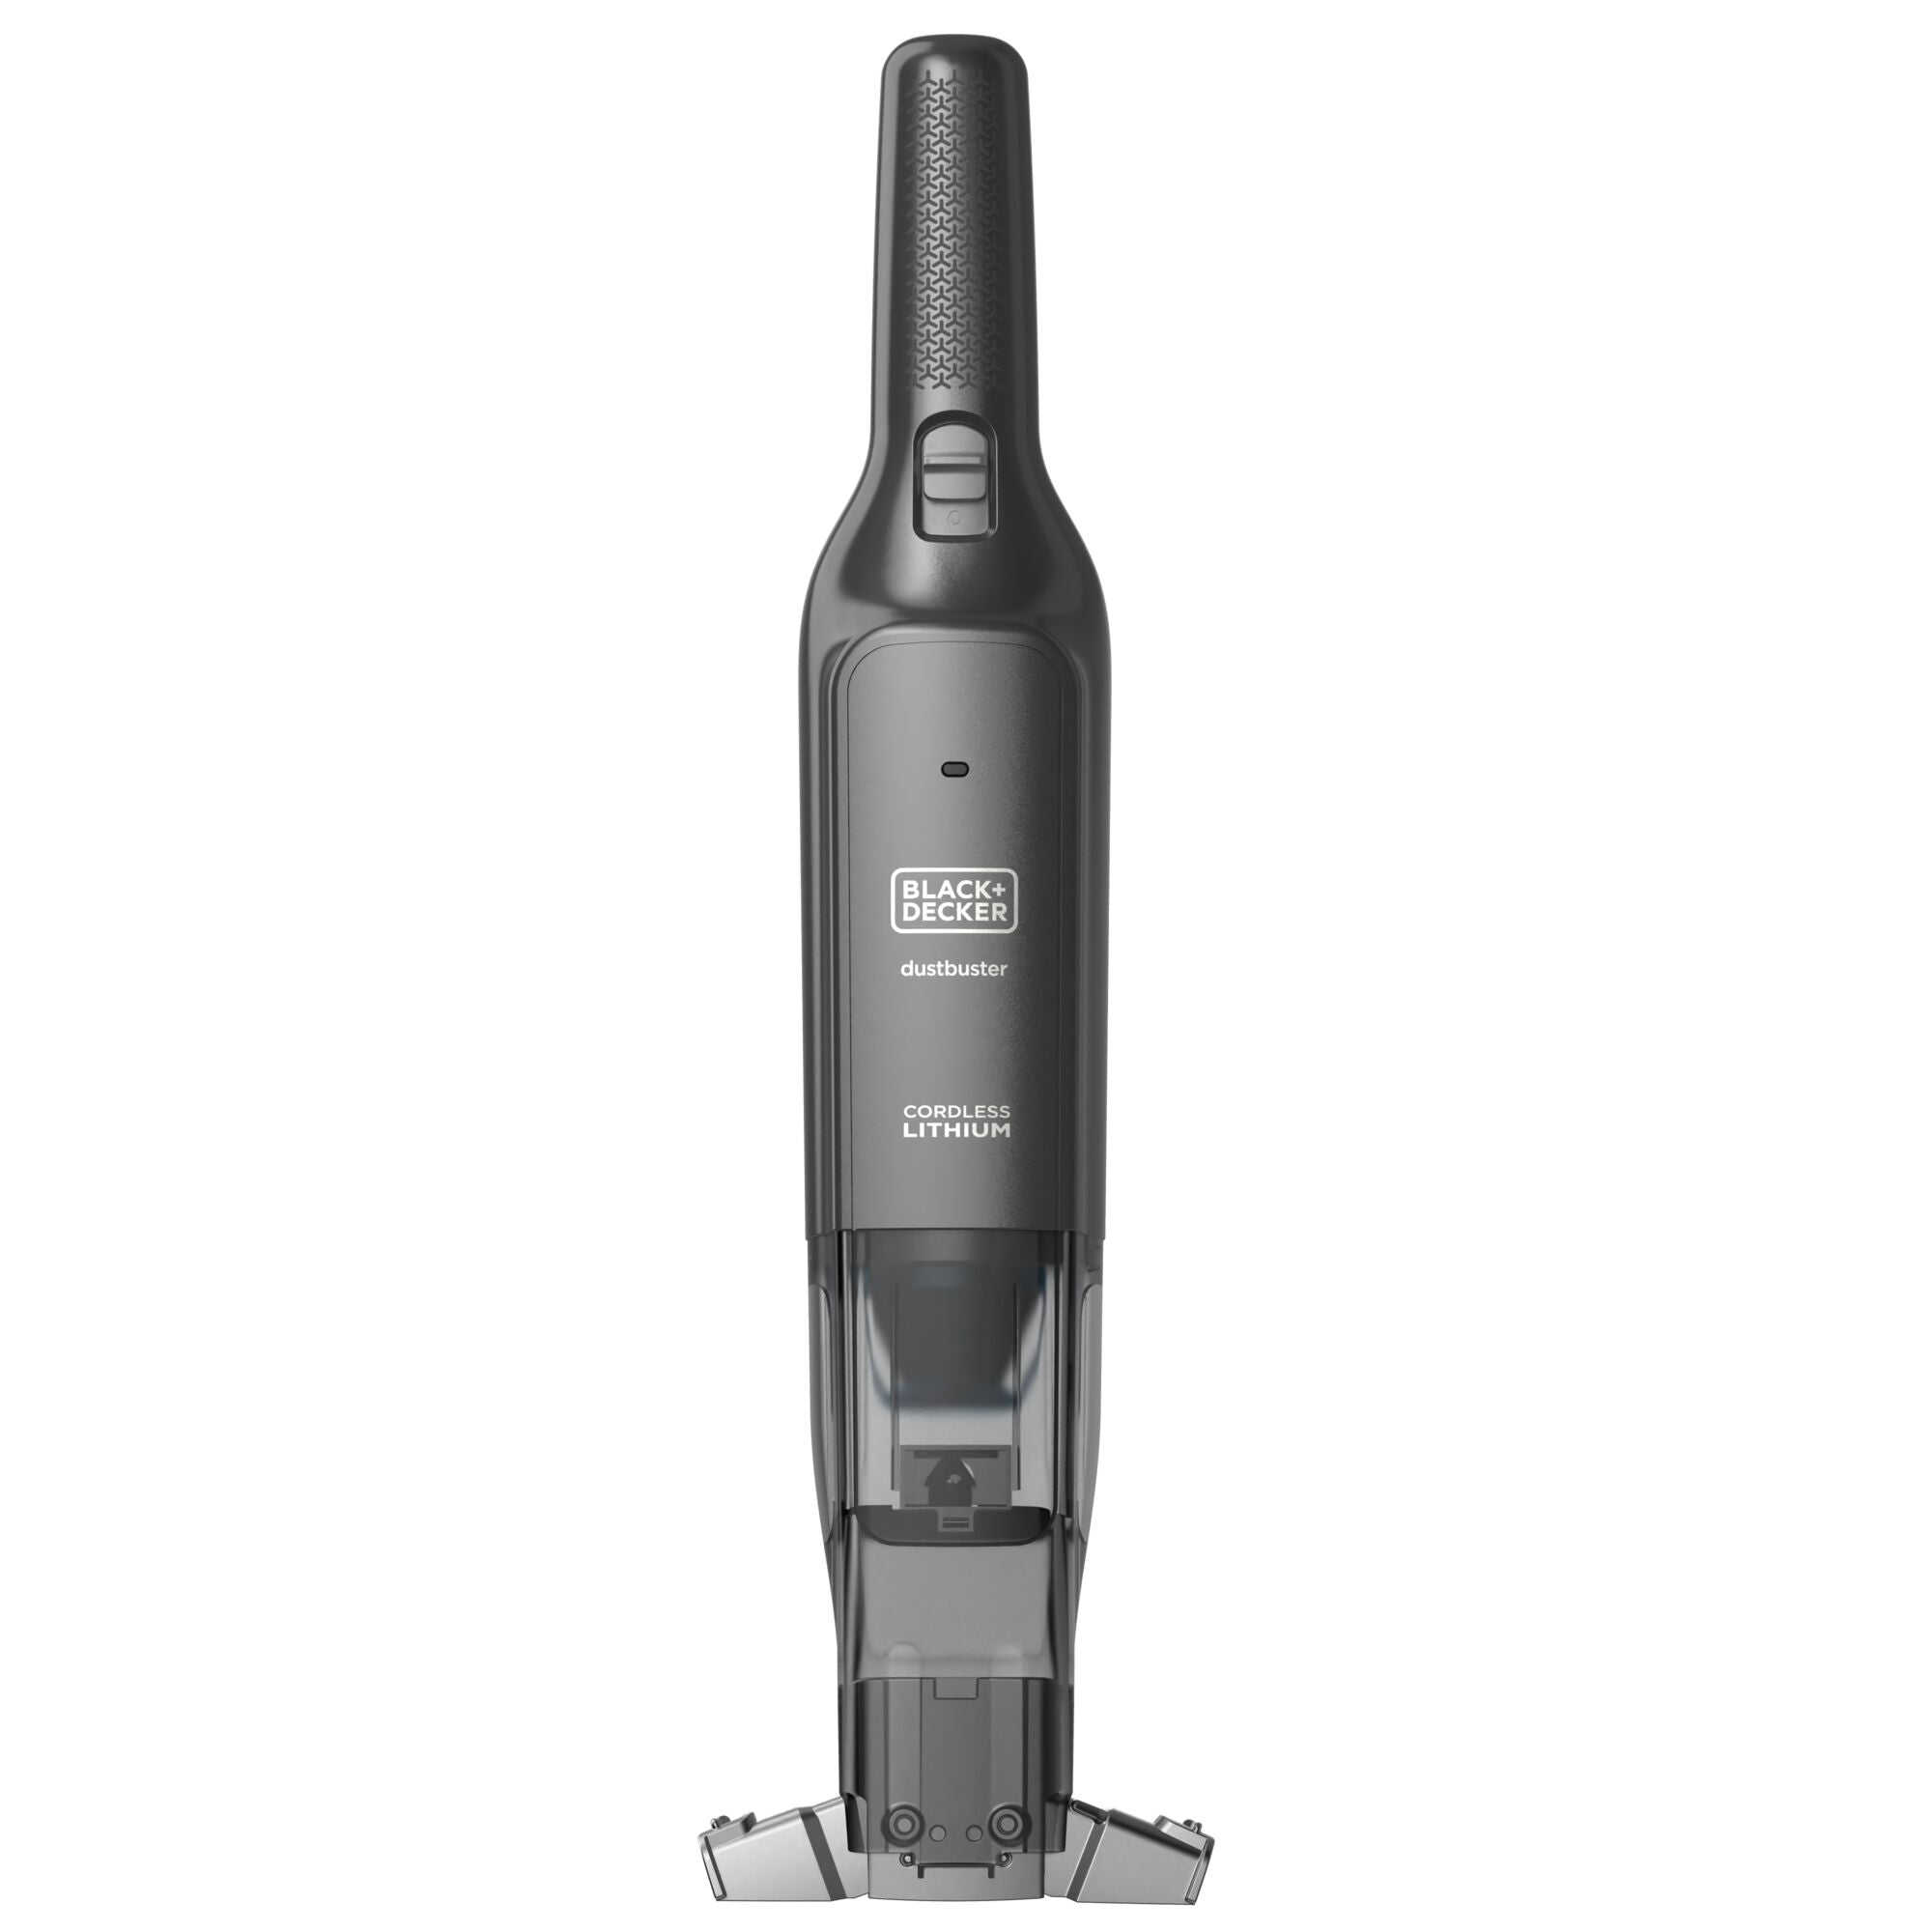 Dustbuster advanced clean slim cordless handheld vacuum.